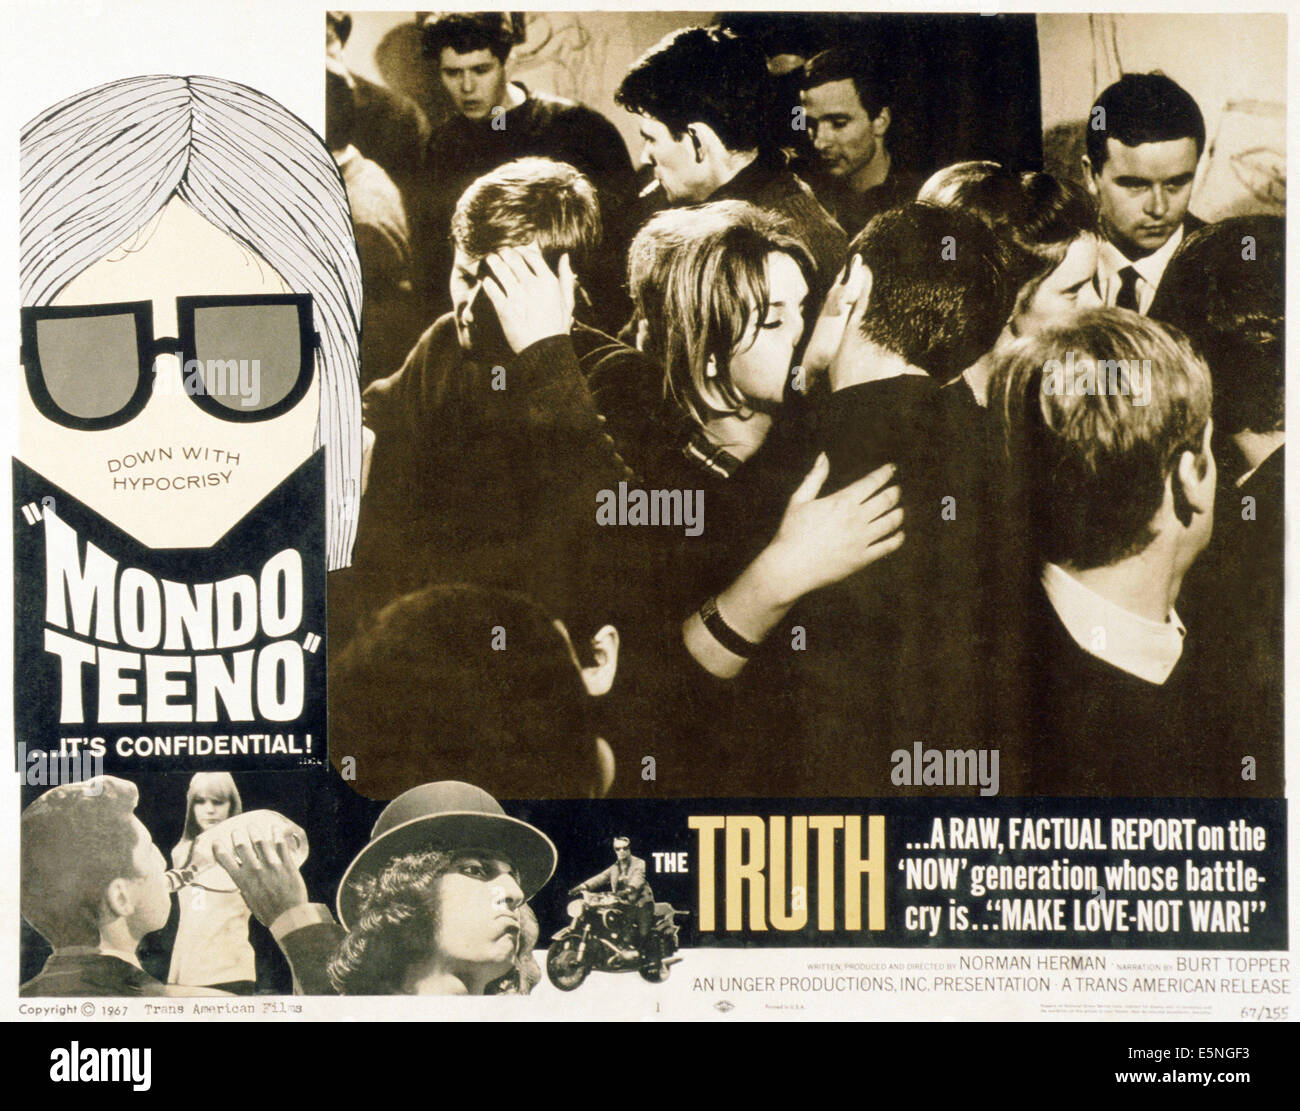 Mondo teeno aka teenage rebellion hi-res stock photography and images -  Alamy